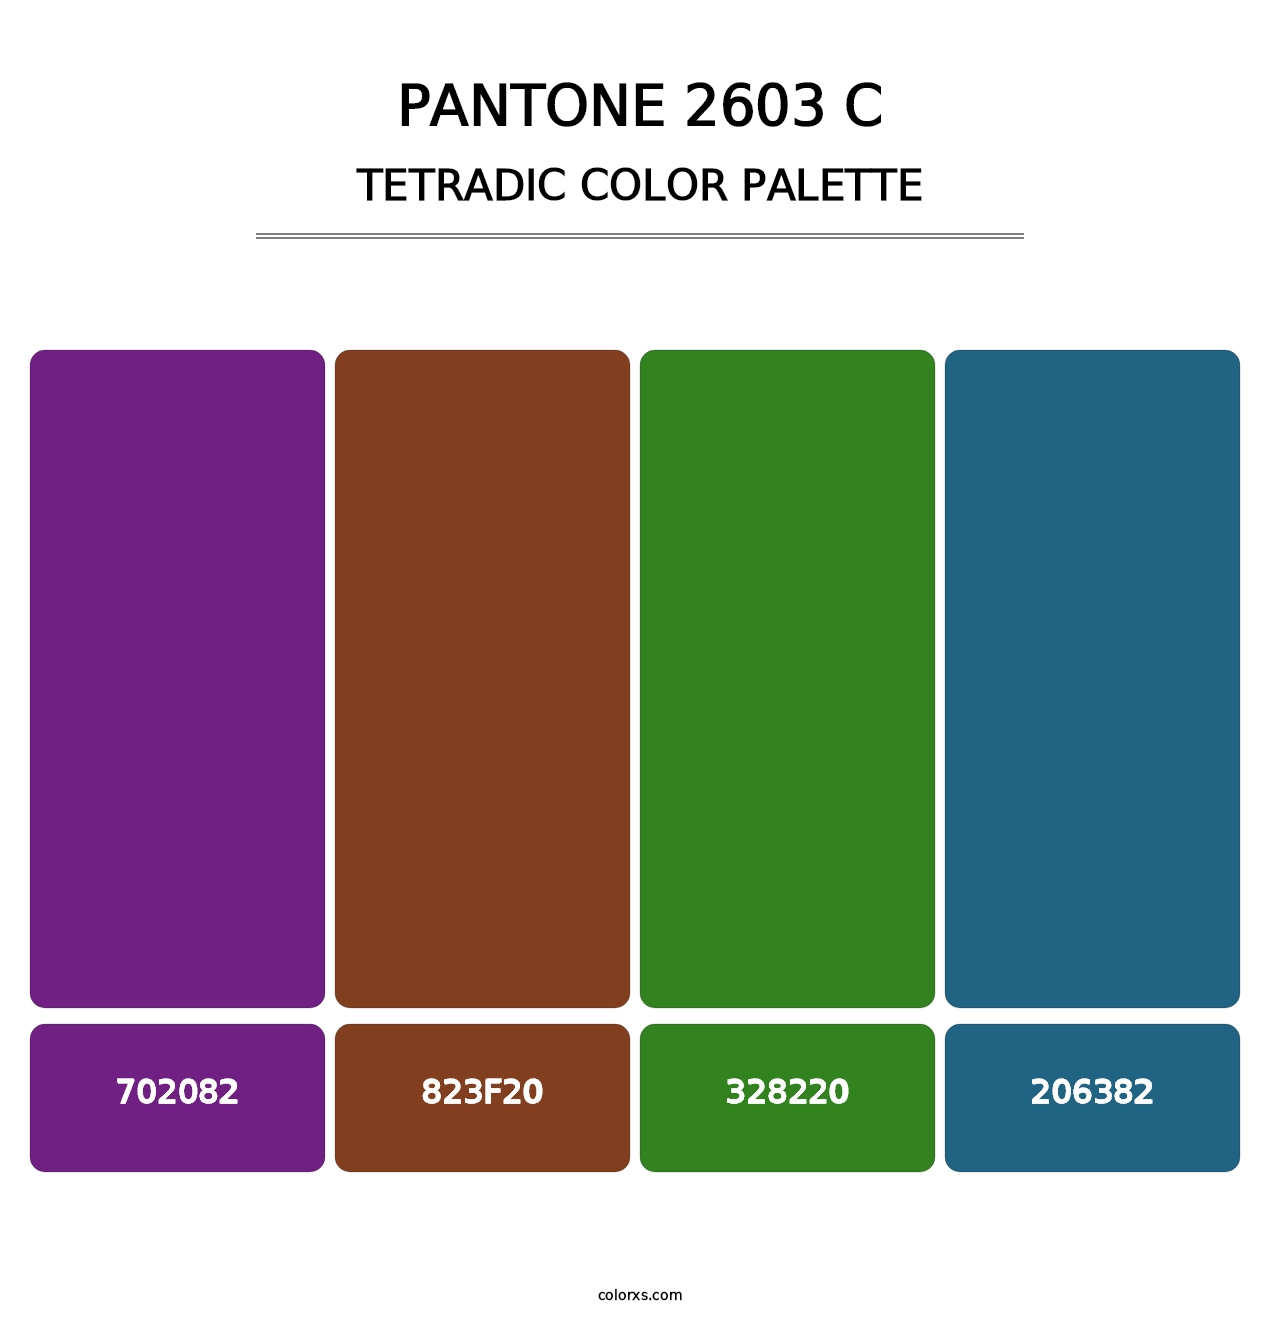 PANTONE 2603 C - Tetradic Color Palette